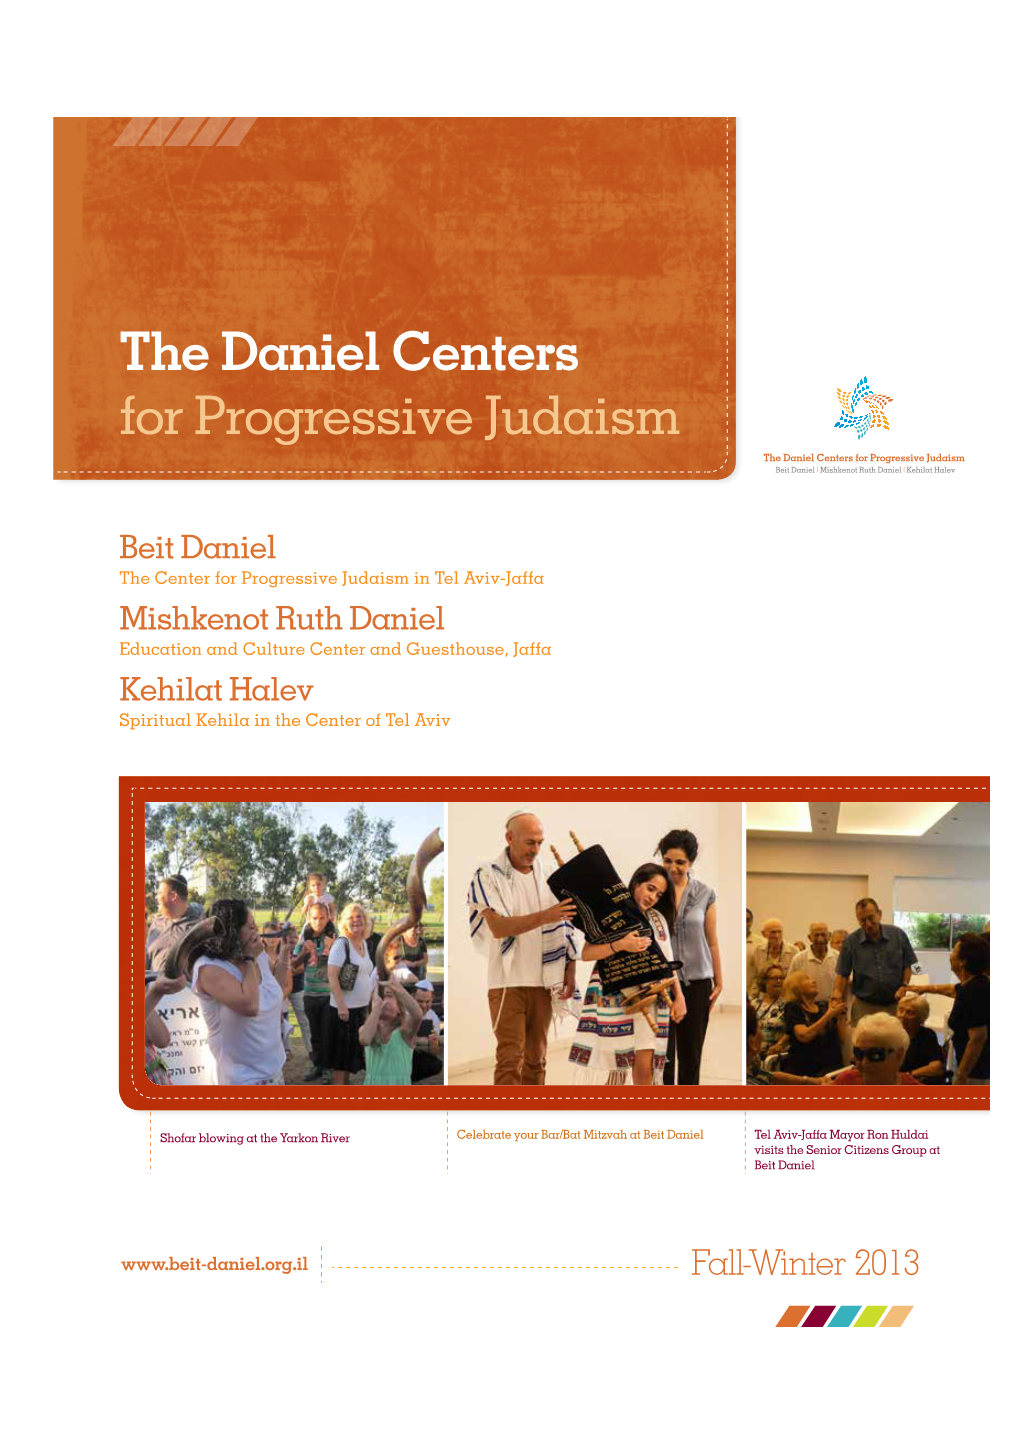 The Daniel Centers for Progressive Judaism the Daniel Centers for Progressive Judaism Beit Daniel | Mishkenot Ruth Daniel | Kehilat Halev